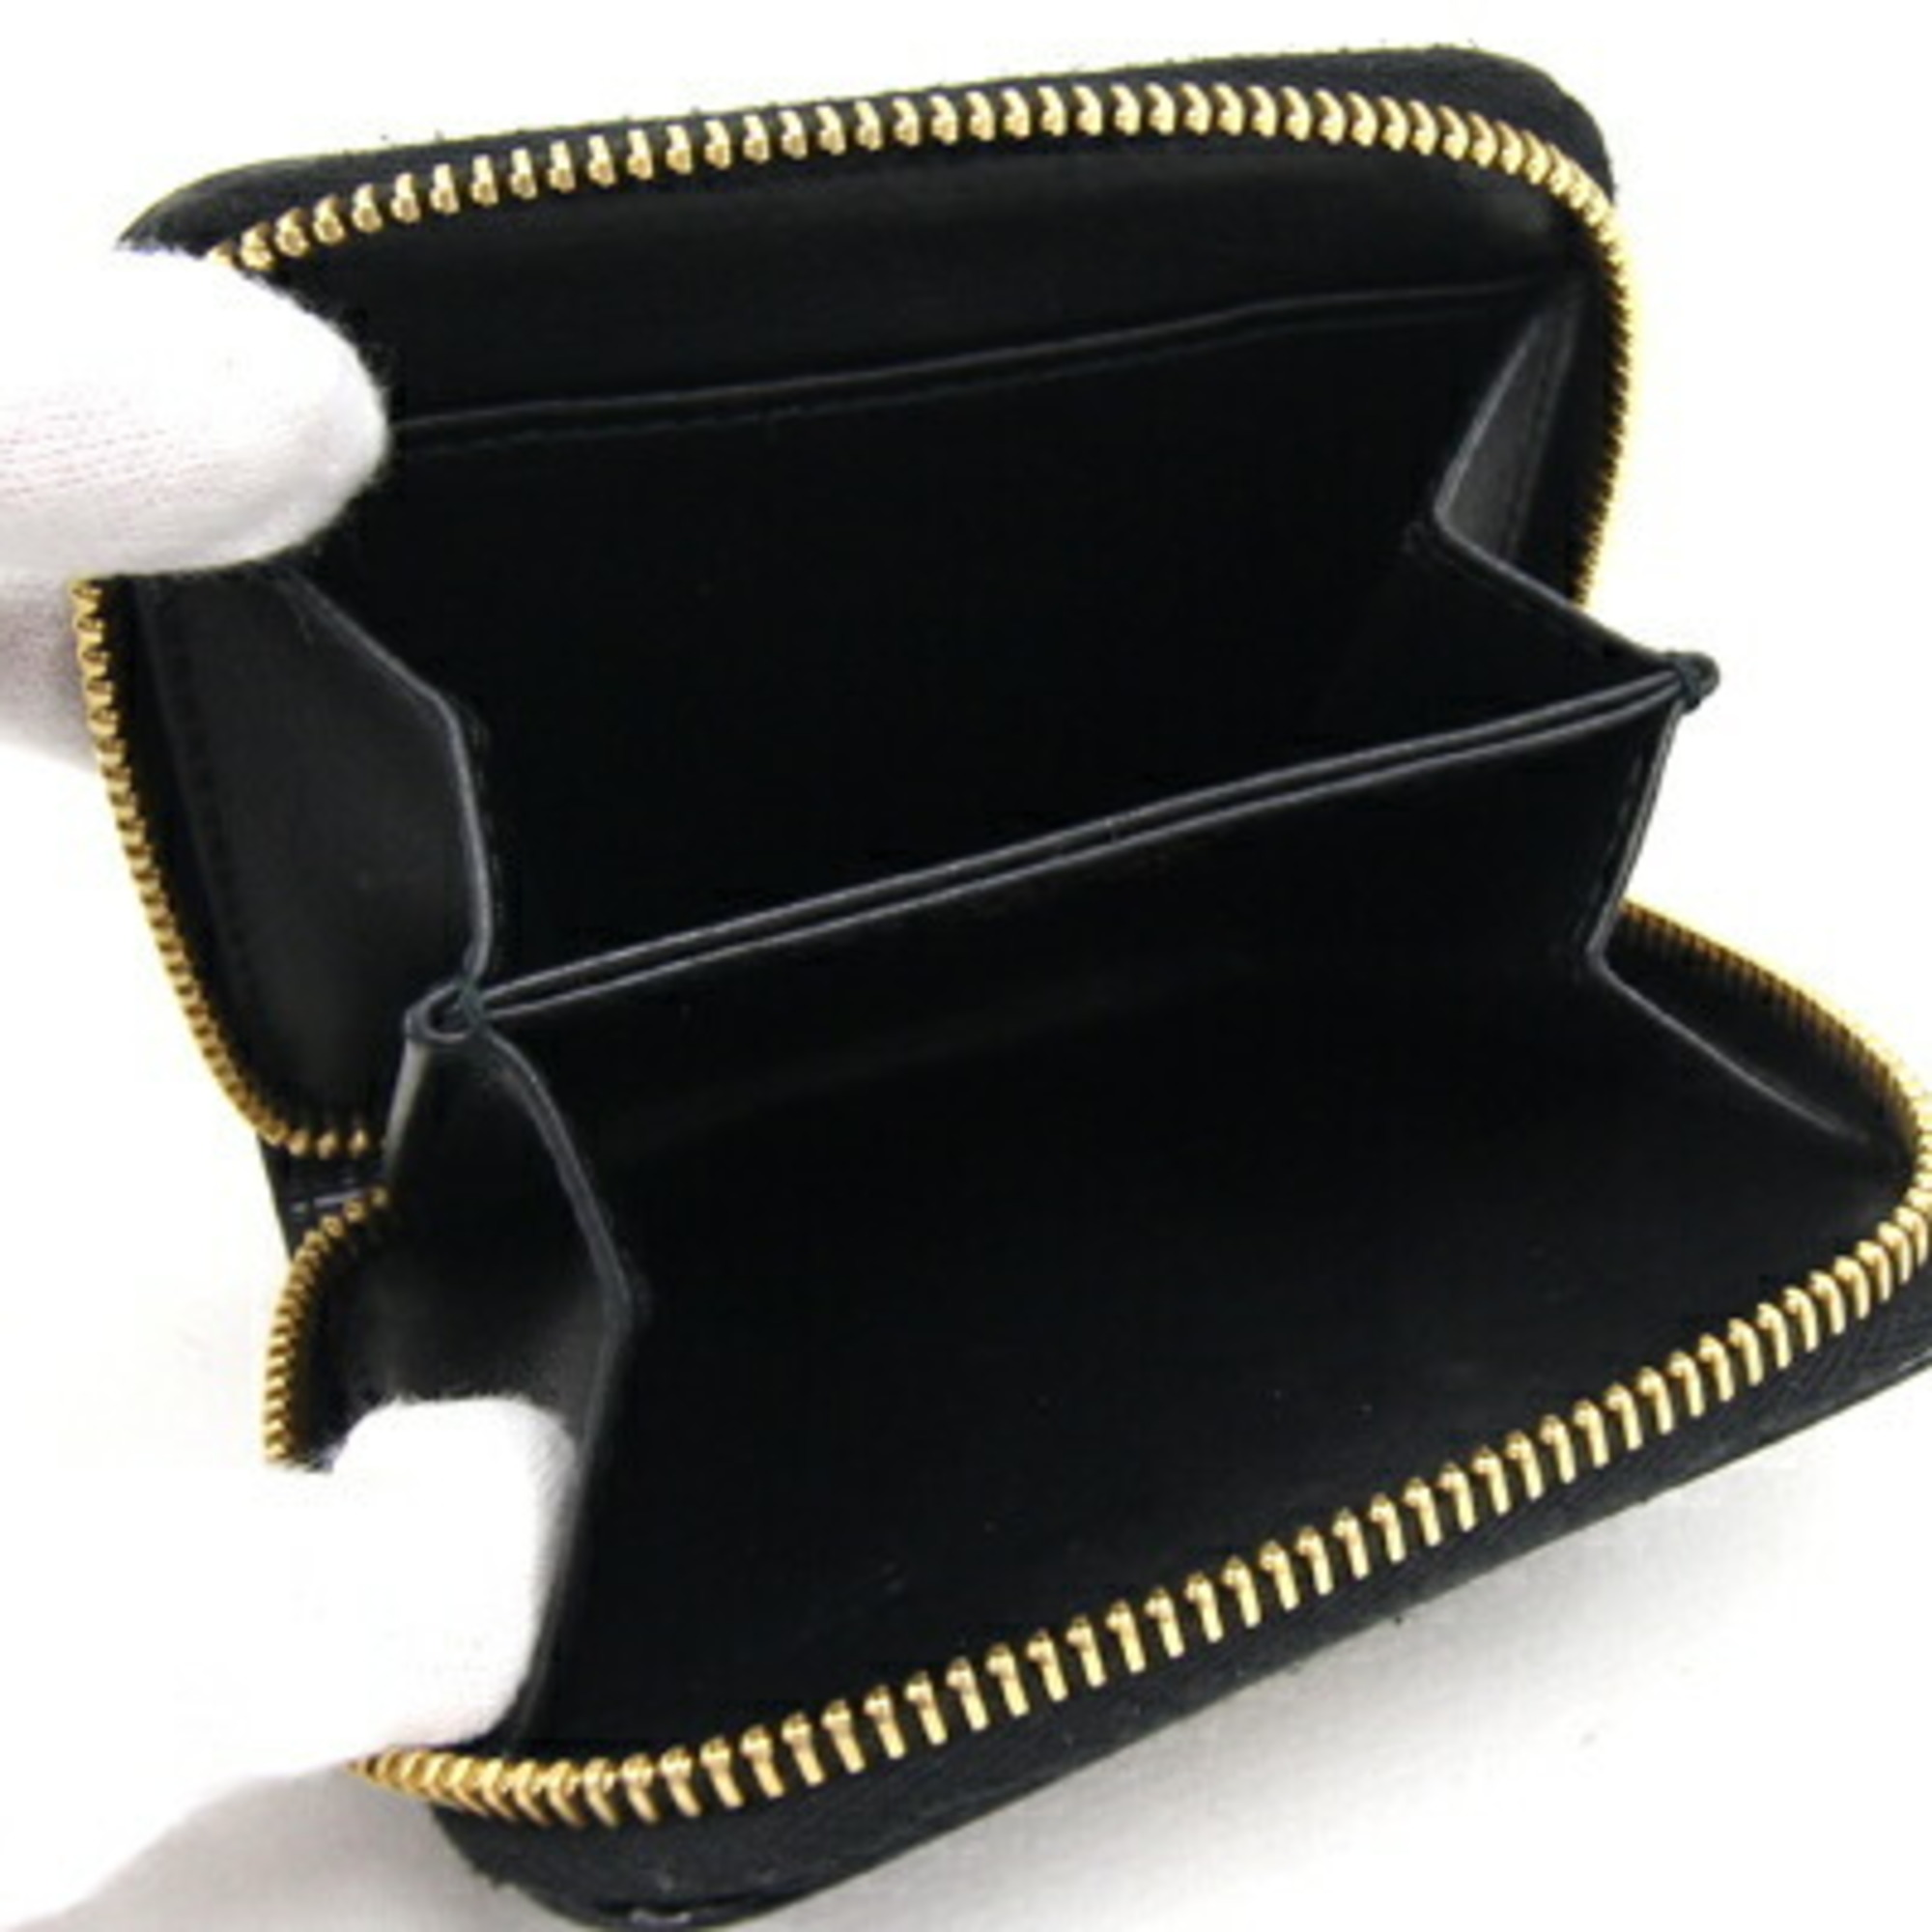 Prada coin case 1MM268 black leather wallet ladies PRADA